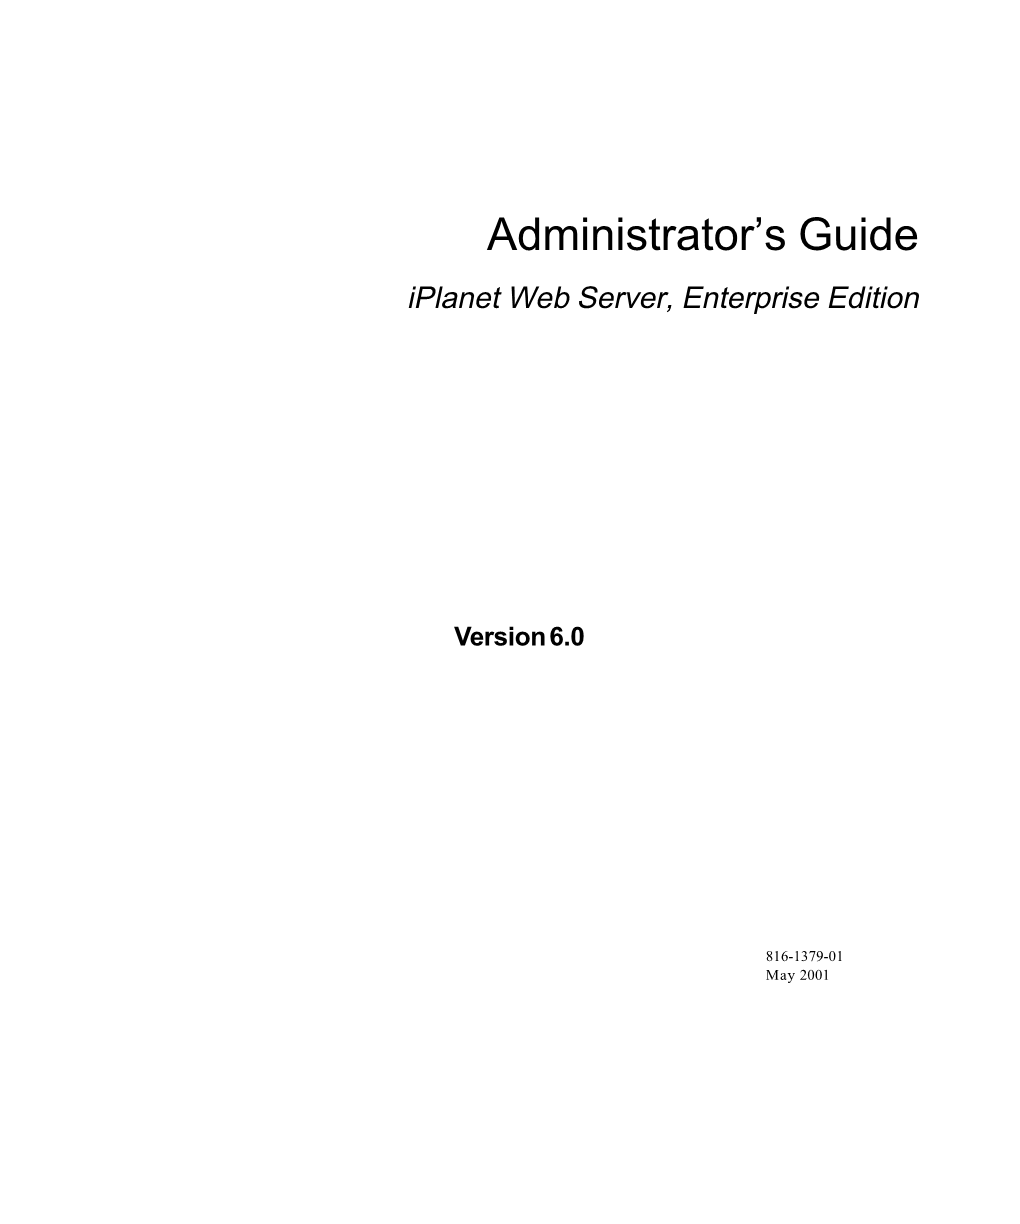 Iplanet Web Server 6.0, Enterprise Edition Administrator's Guide